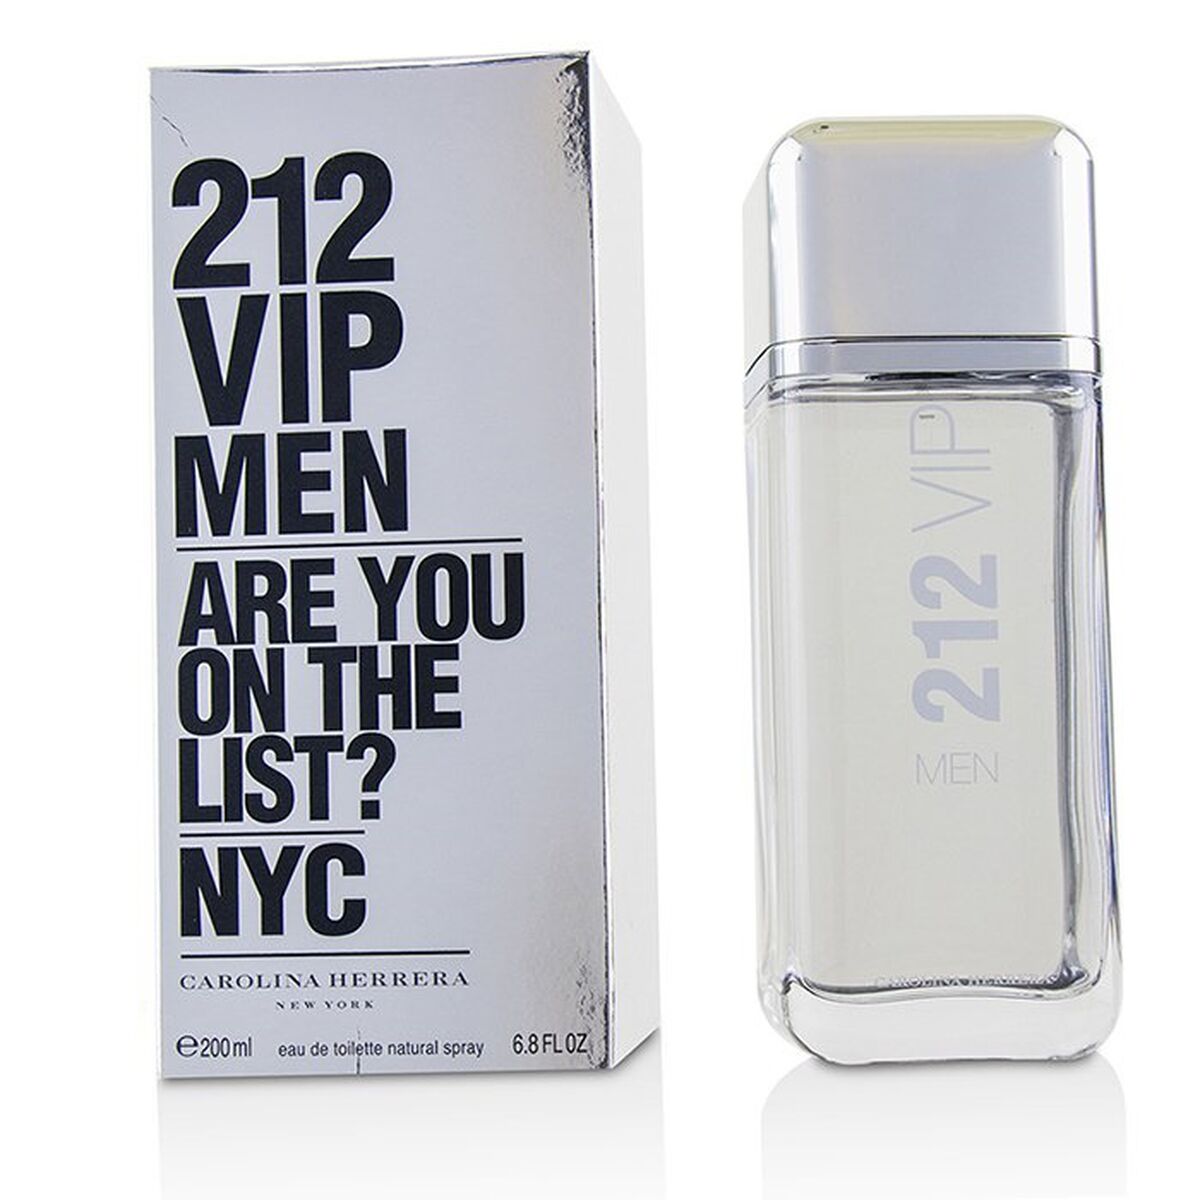 Perfume Hombre 212 Vip Carolina Herrera 212 Vip Men EDT 200 ml (1 unidad)